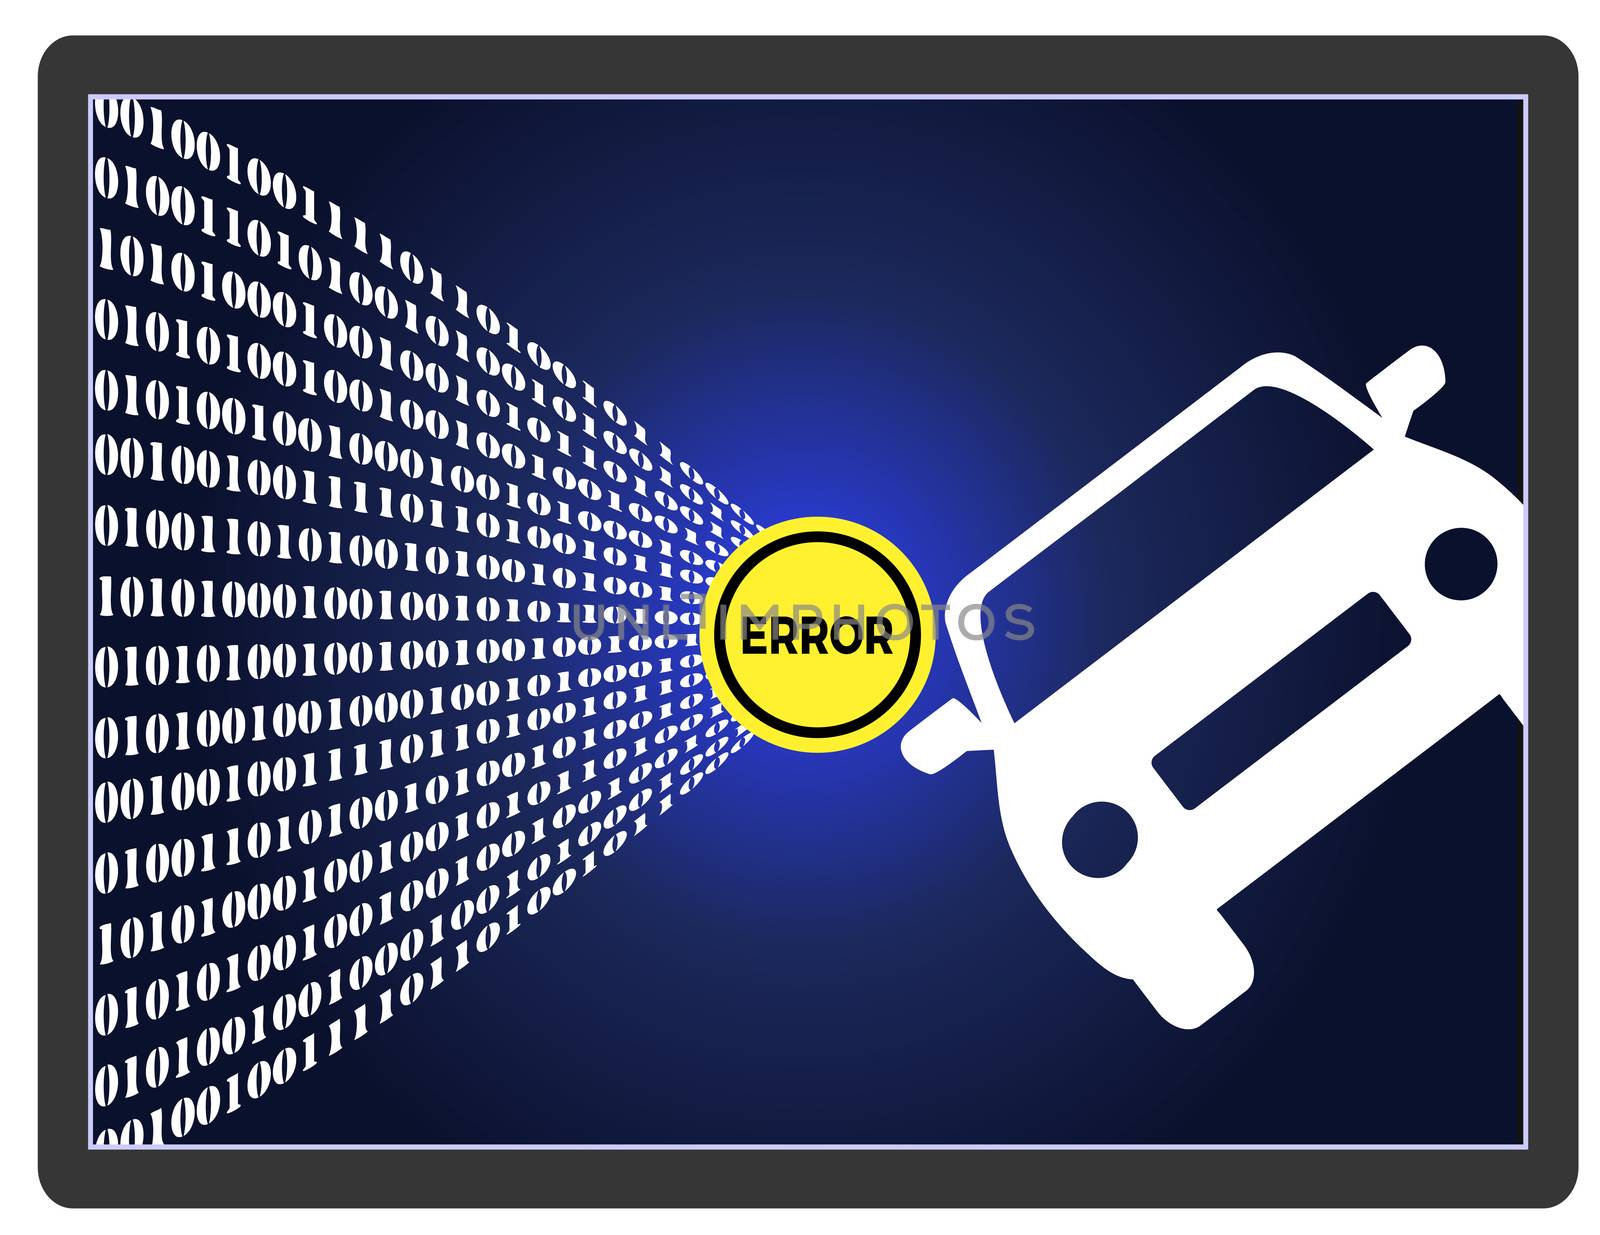 Traffic accident of autonomous vehicle through software failures

